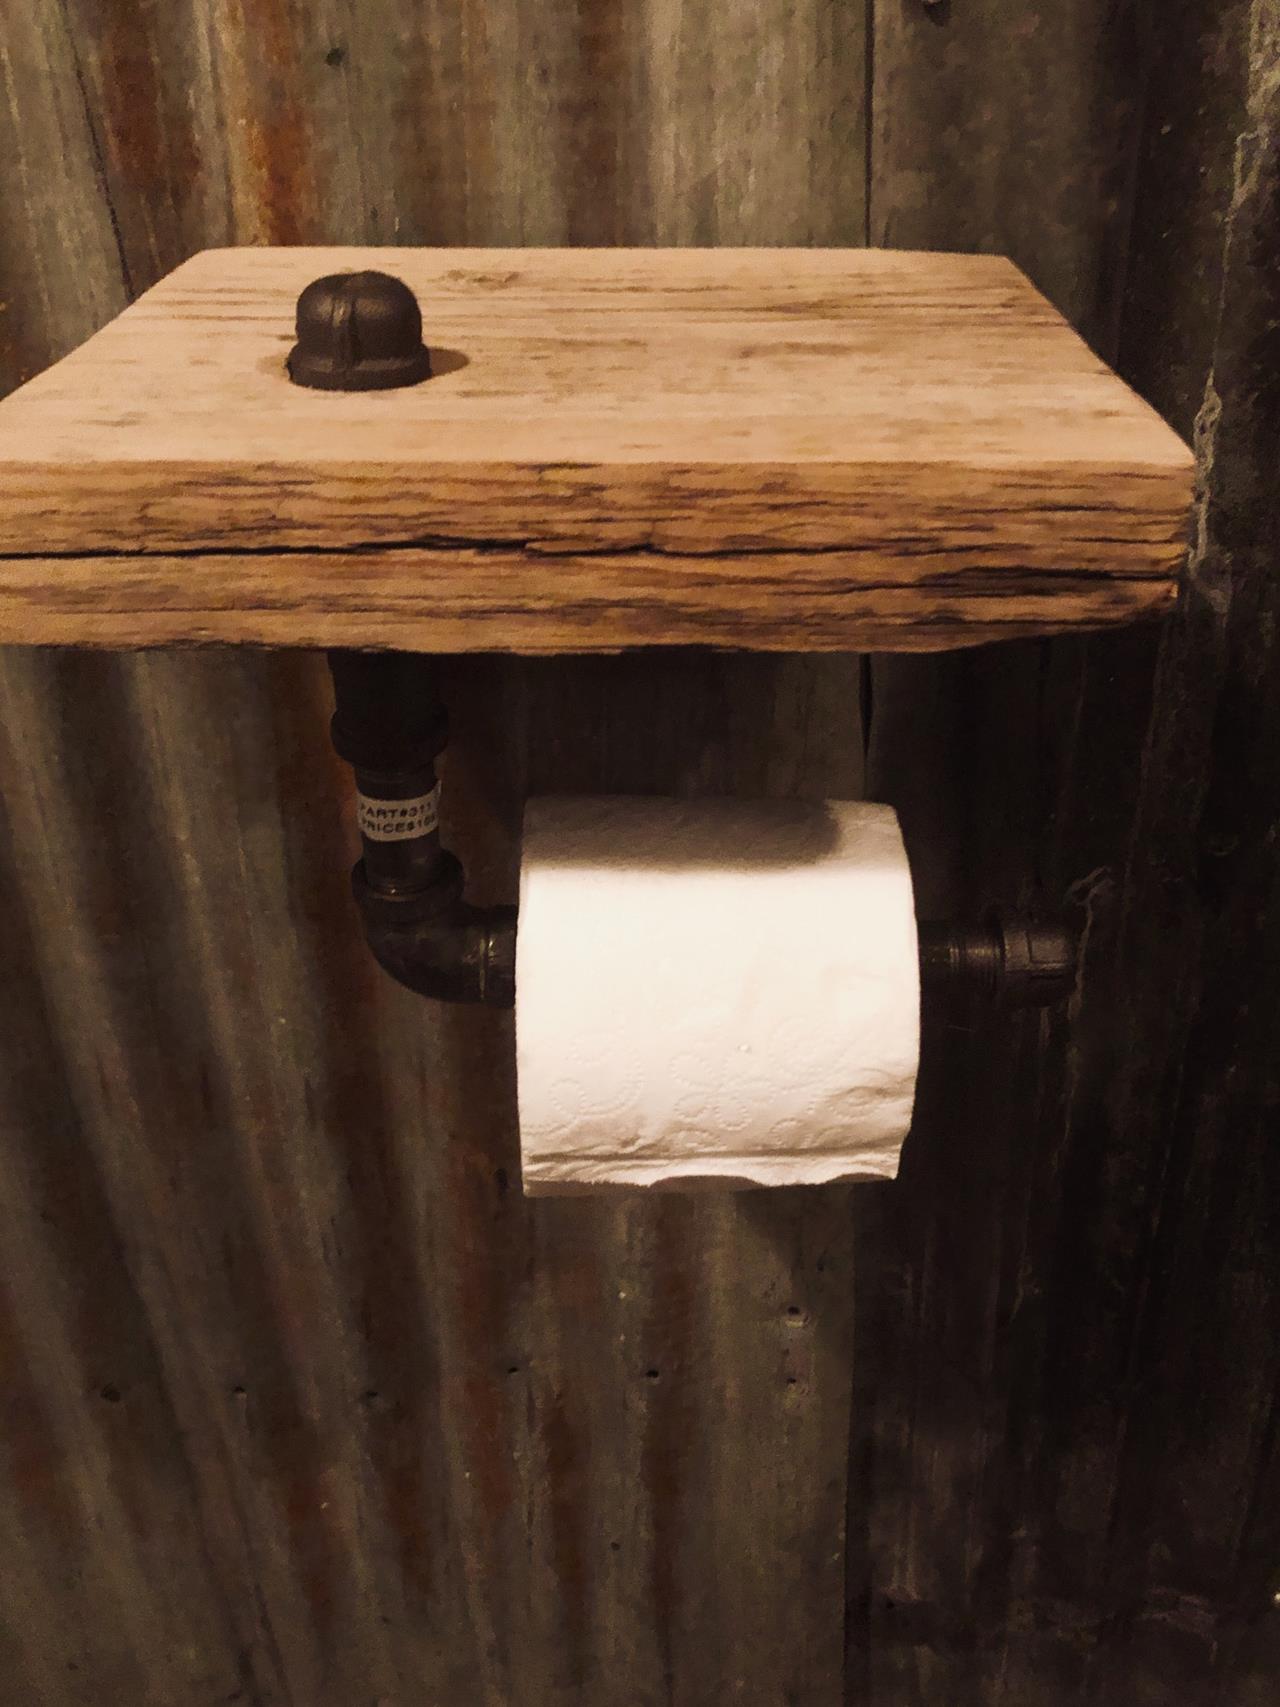 Rustic toilet paper holder